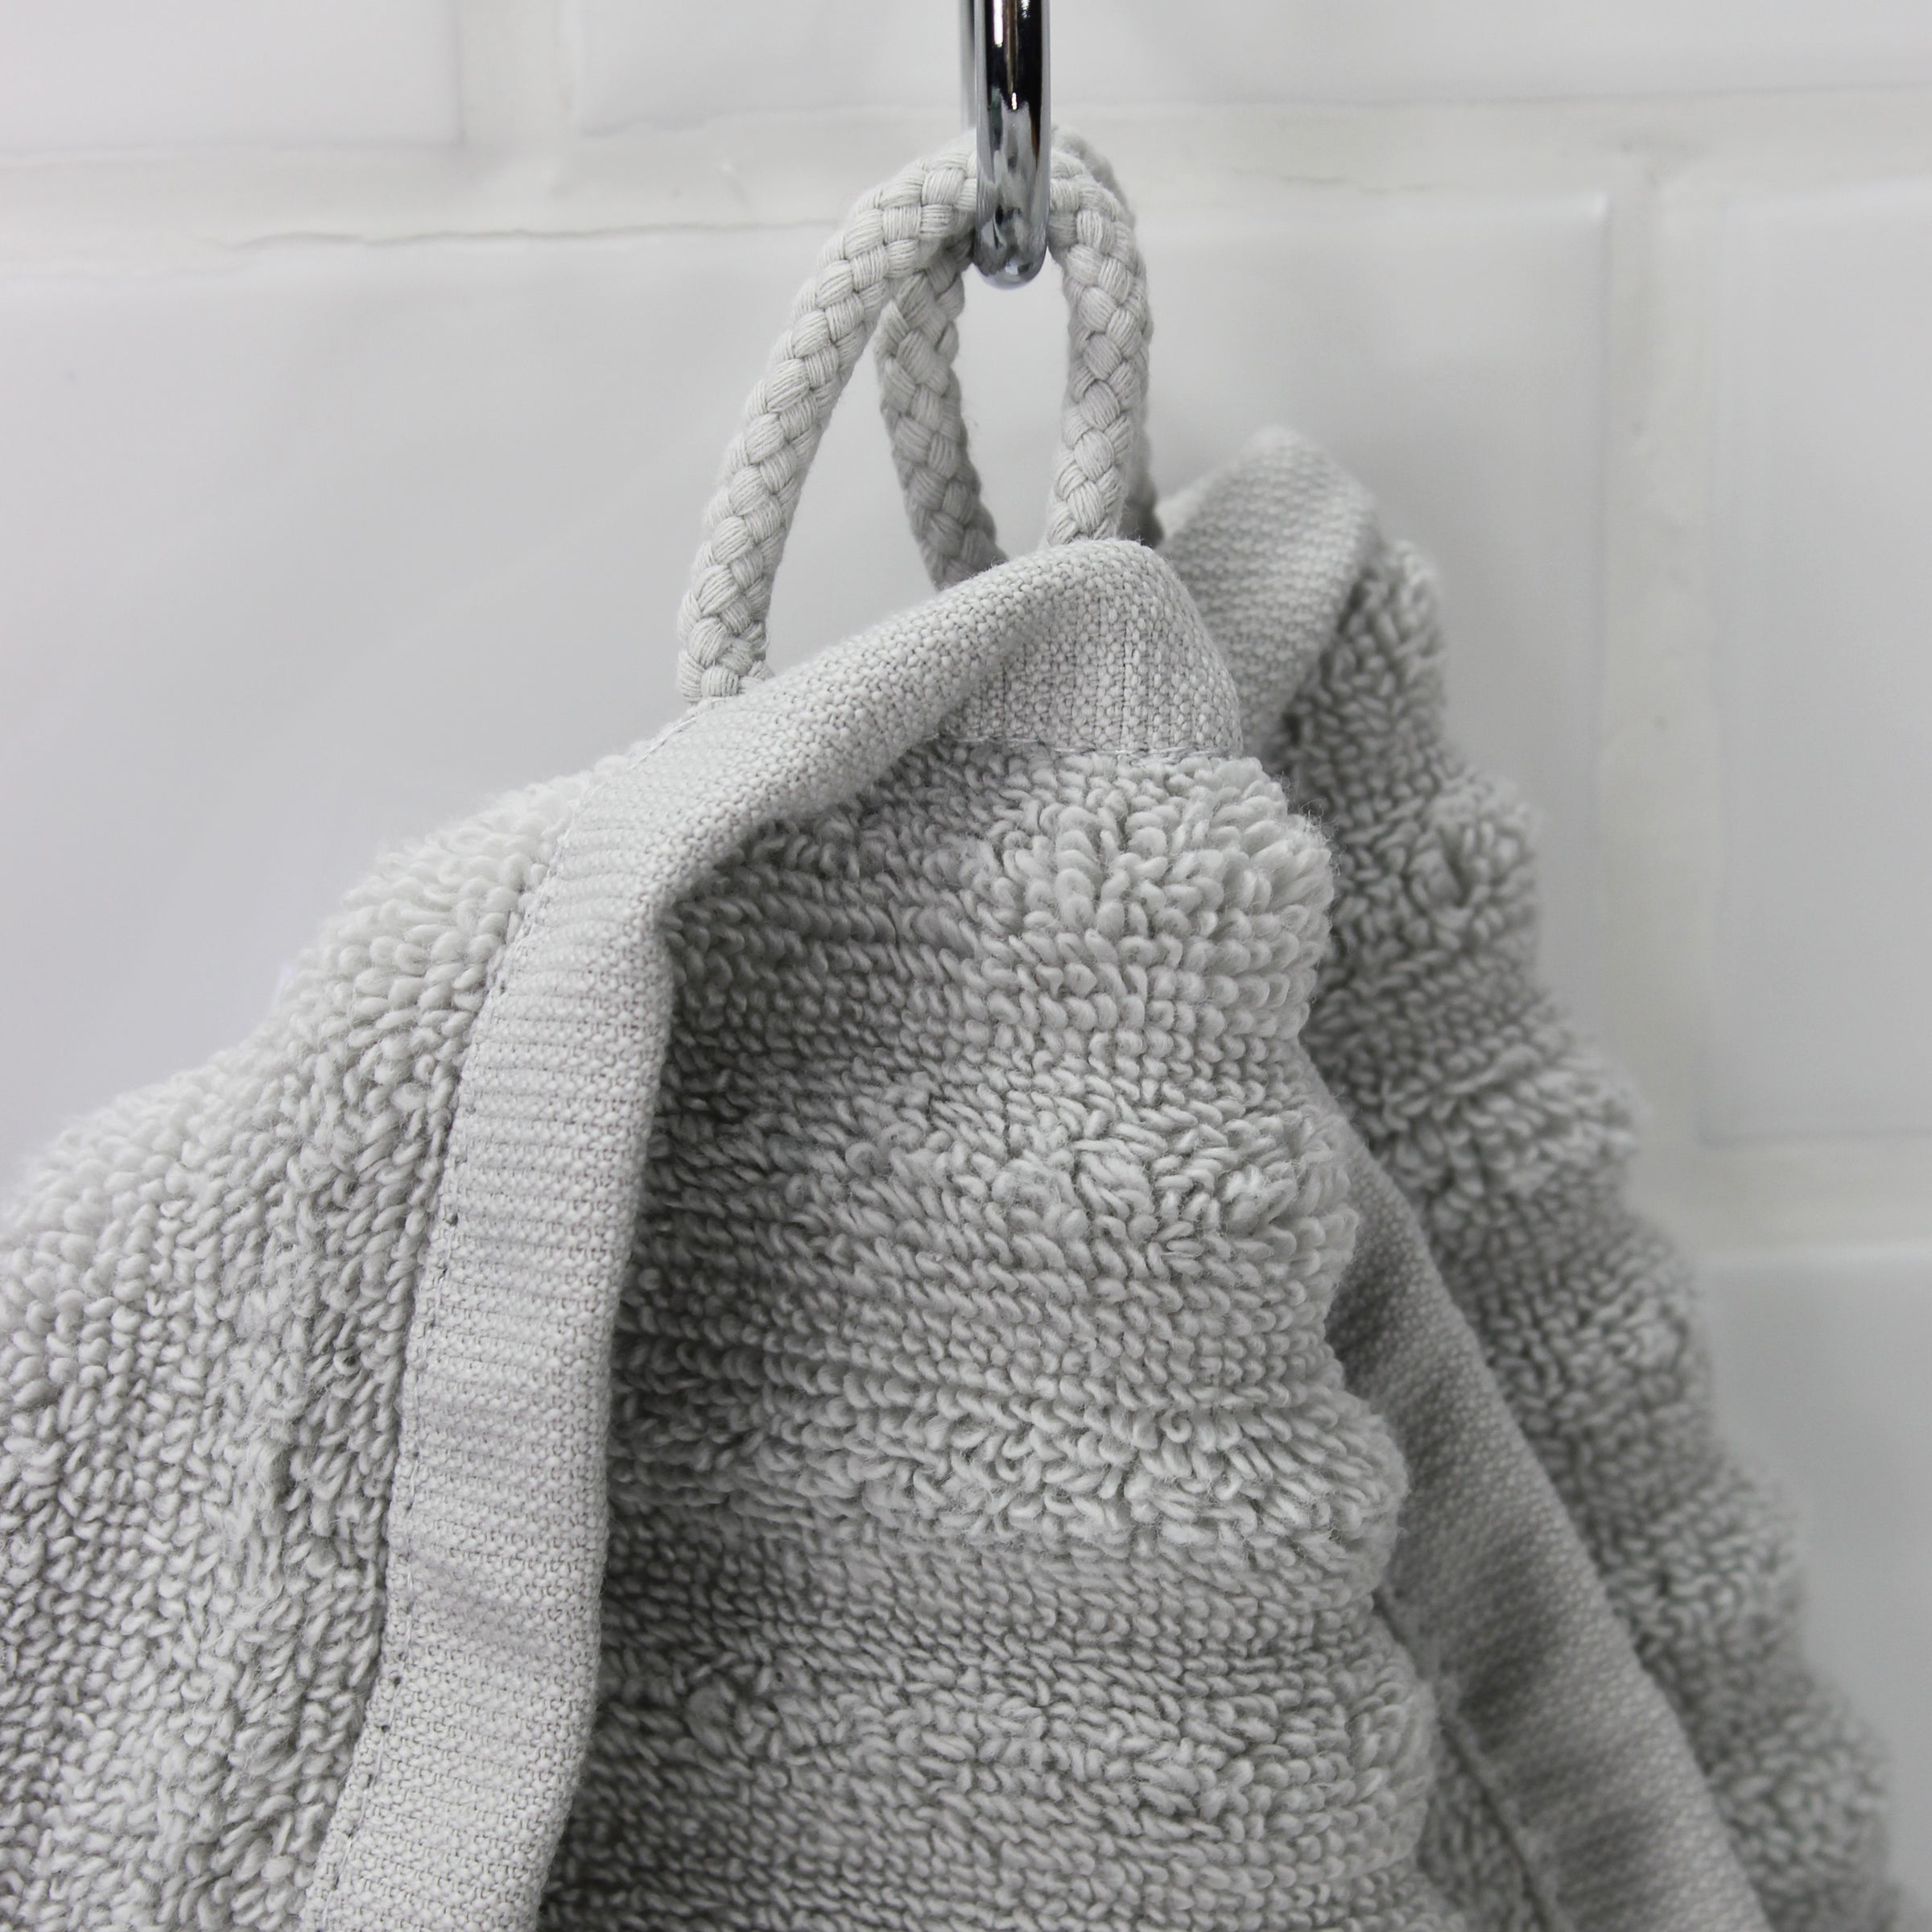 Baltic Linen Sobel Westex Pure Elegance 100-Percent Turkish Cotton 6-Piece  Luxury Towel Set - Sterling 3535586900000